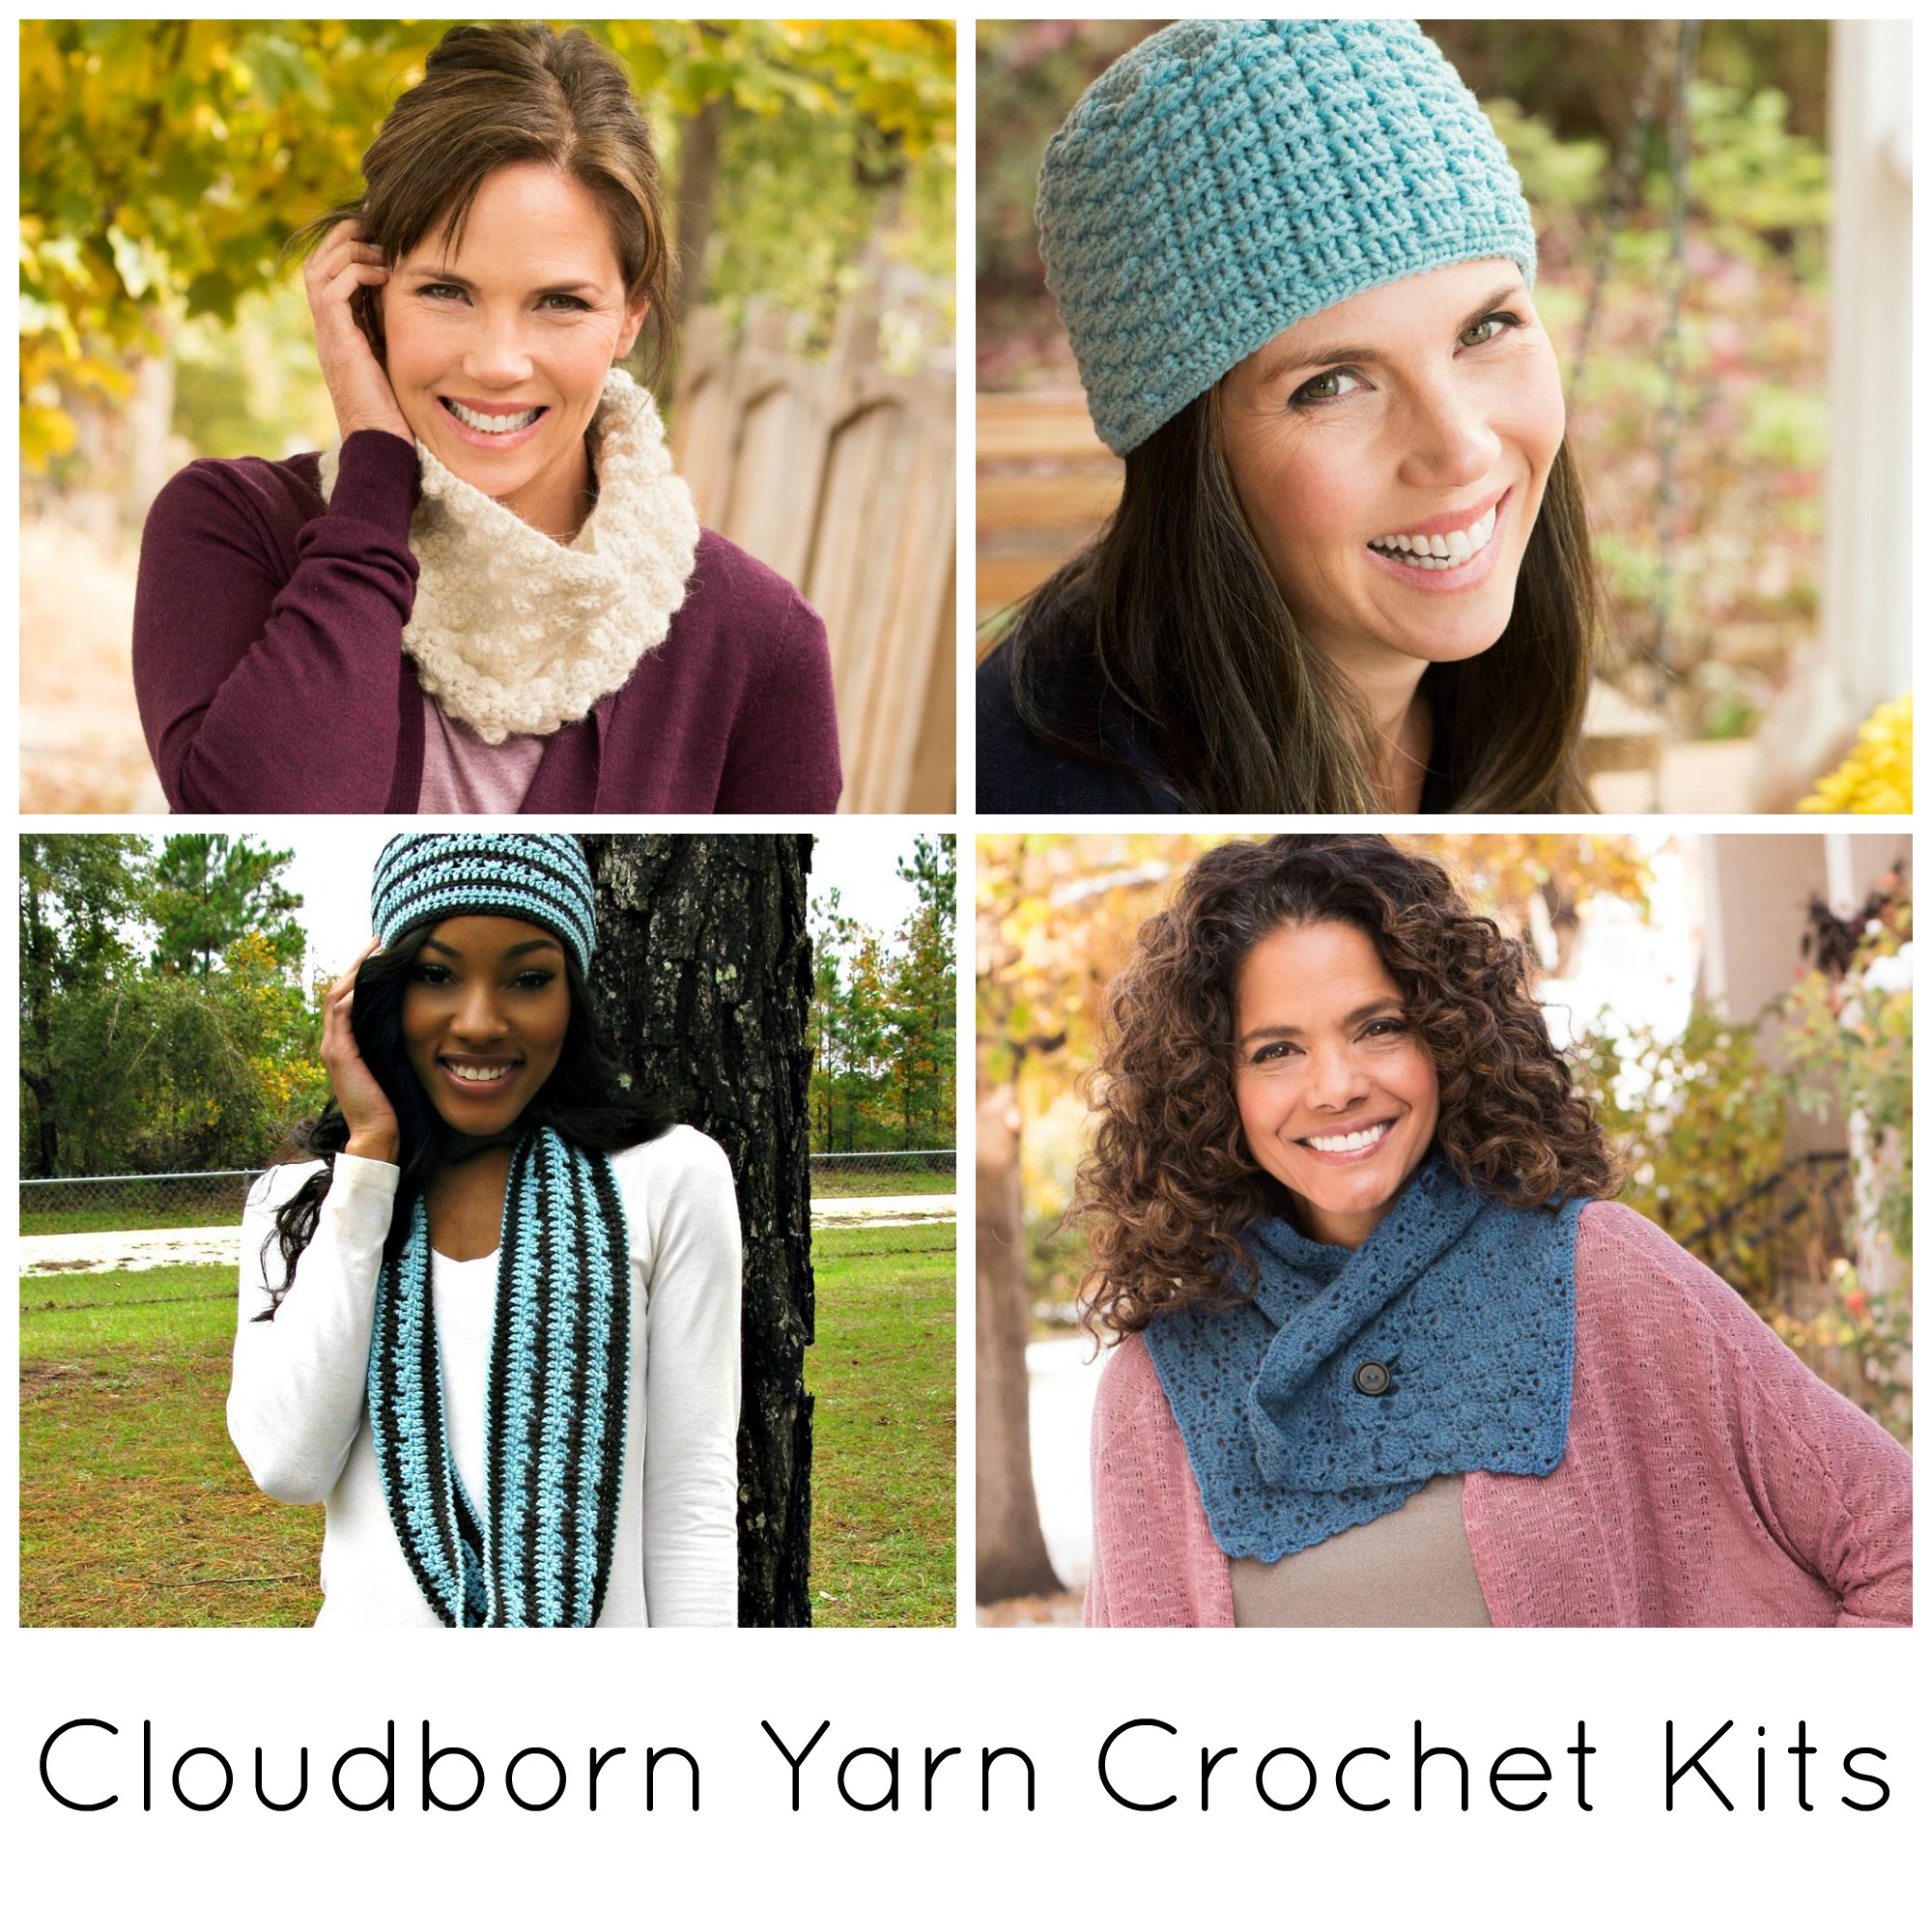 Cloudborn Yarn Crochet Kits